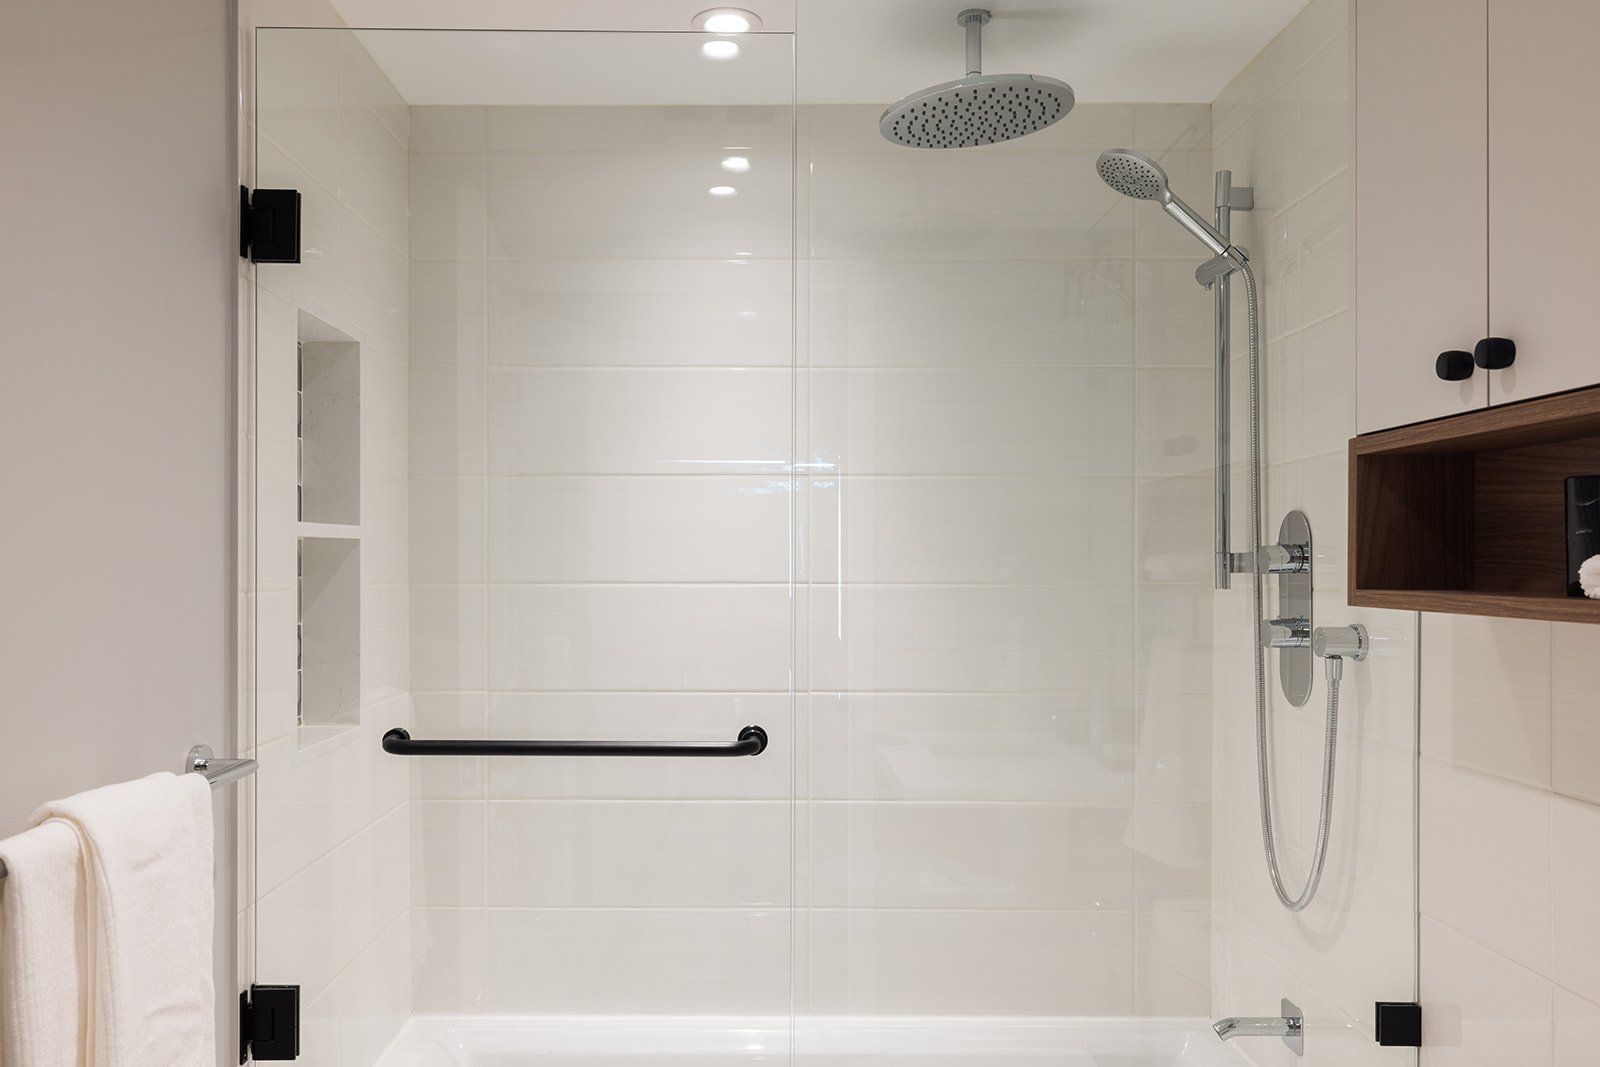 Tub and shower combo in GTA condo bathroom renovation by Golden Bee Condos